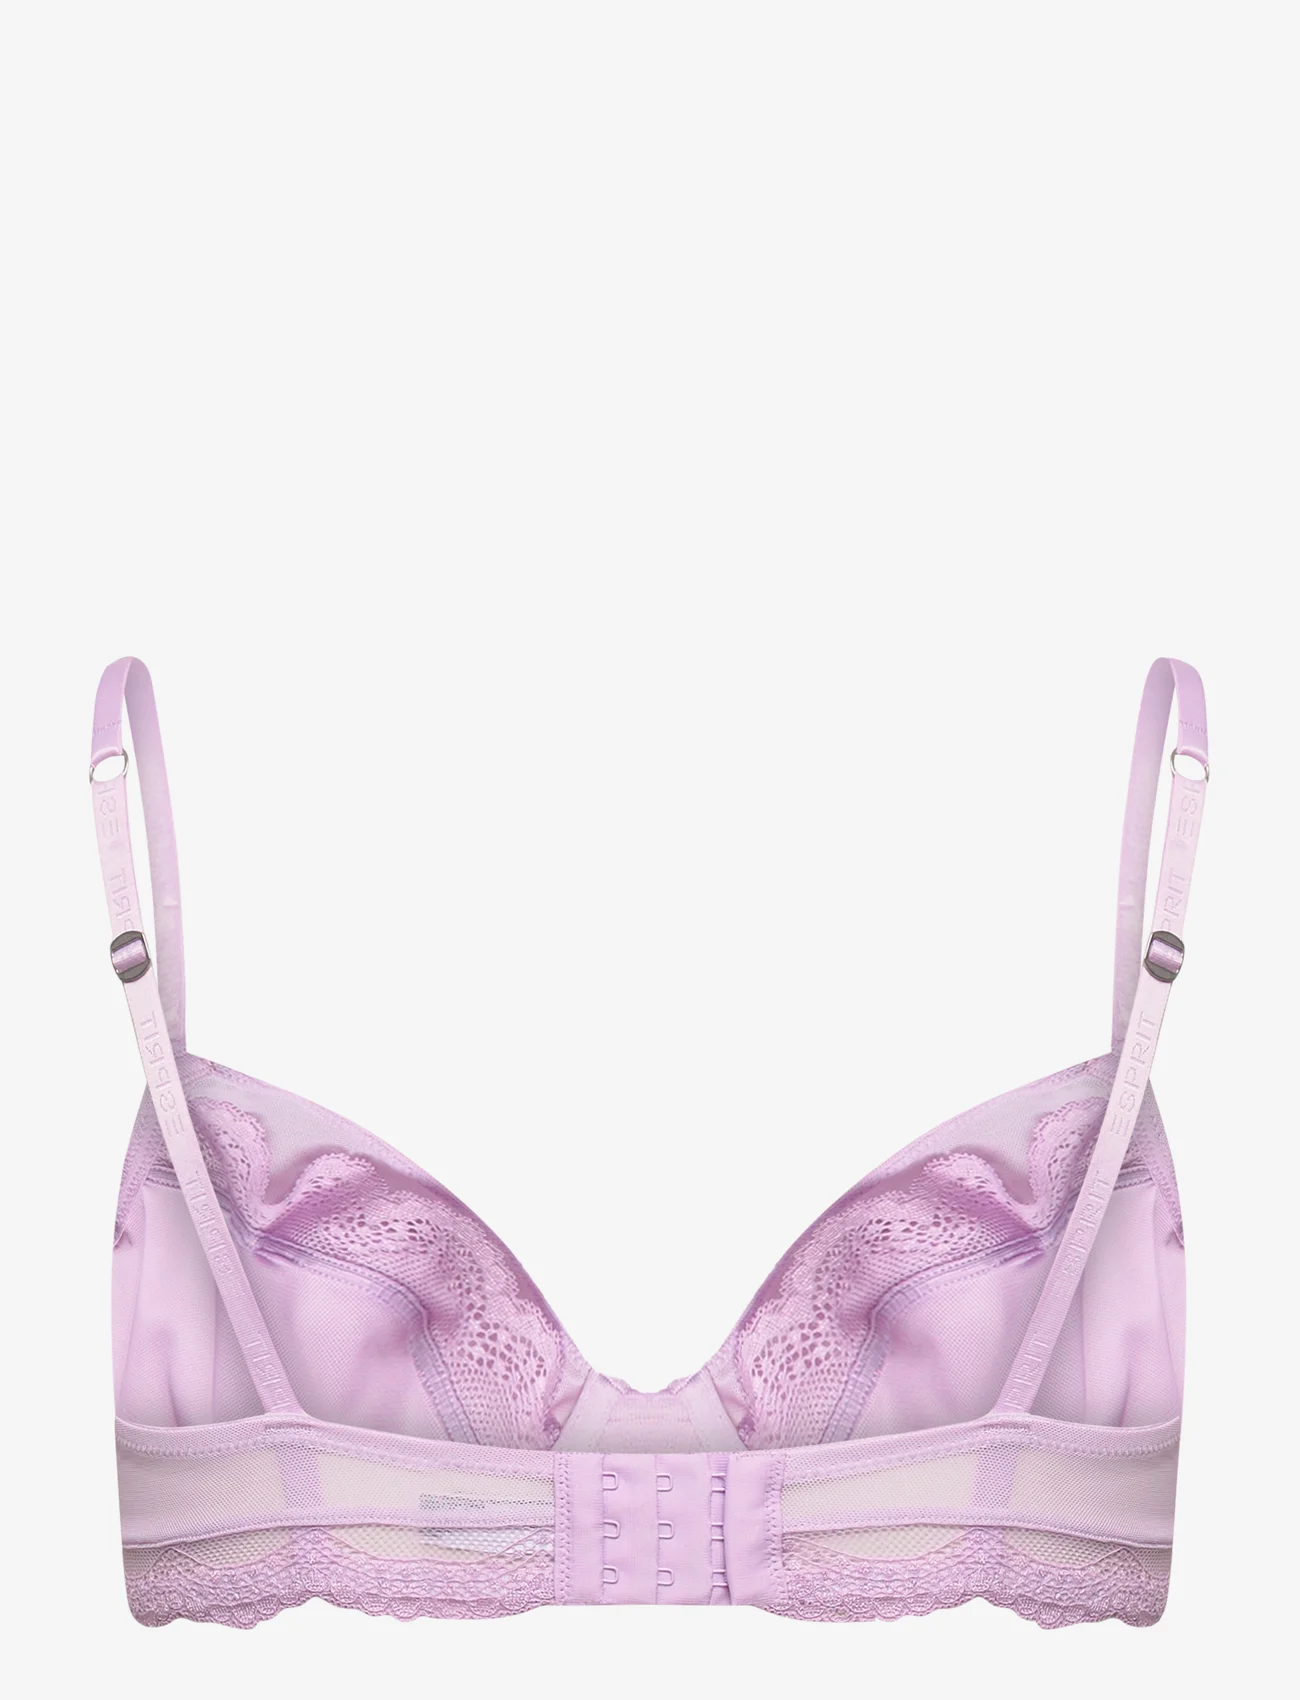 Esprit Bodywear Women - Unpadded underwire bra with lace - lowest prices - violet - 1